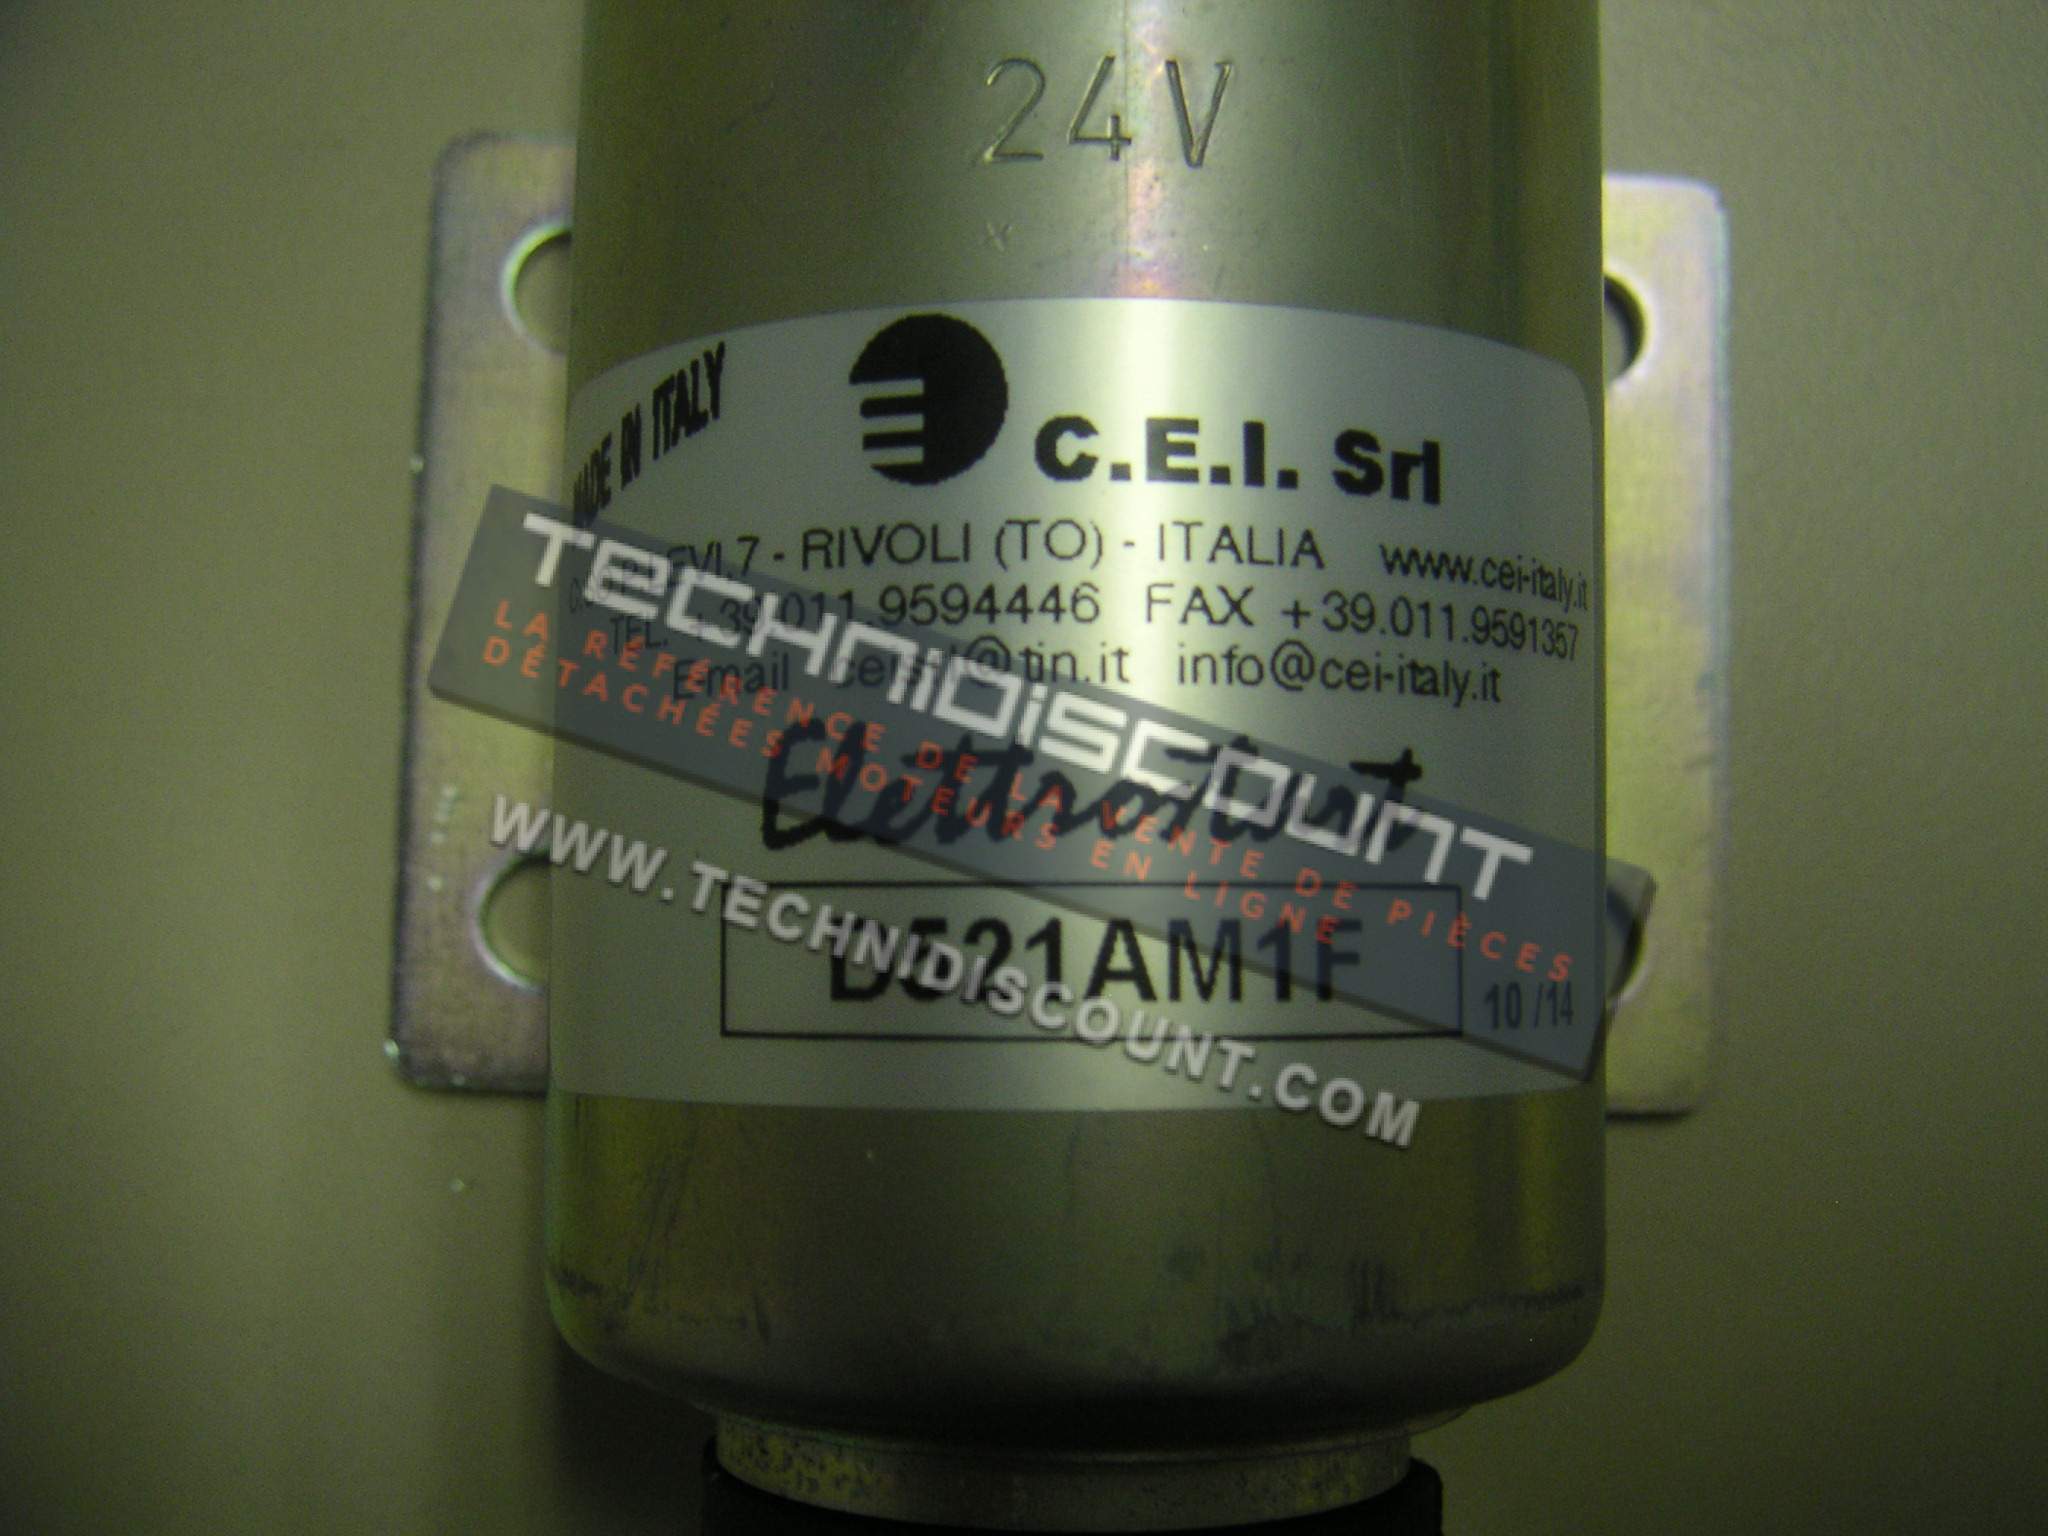 Elettrostart D521AM1F CEI / Electrostart D521AM1F 24V Ø50